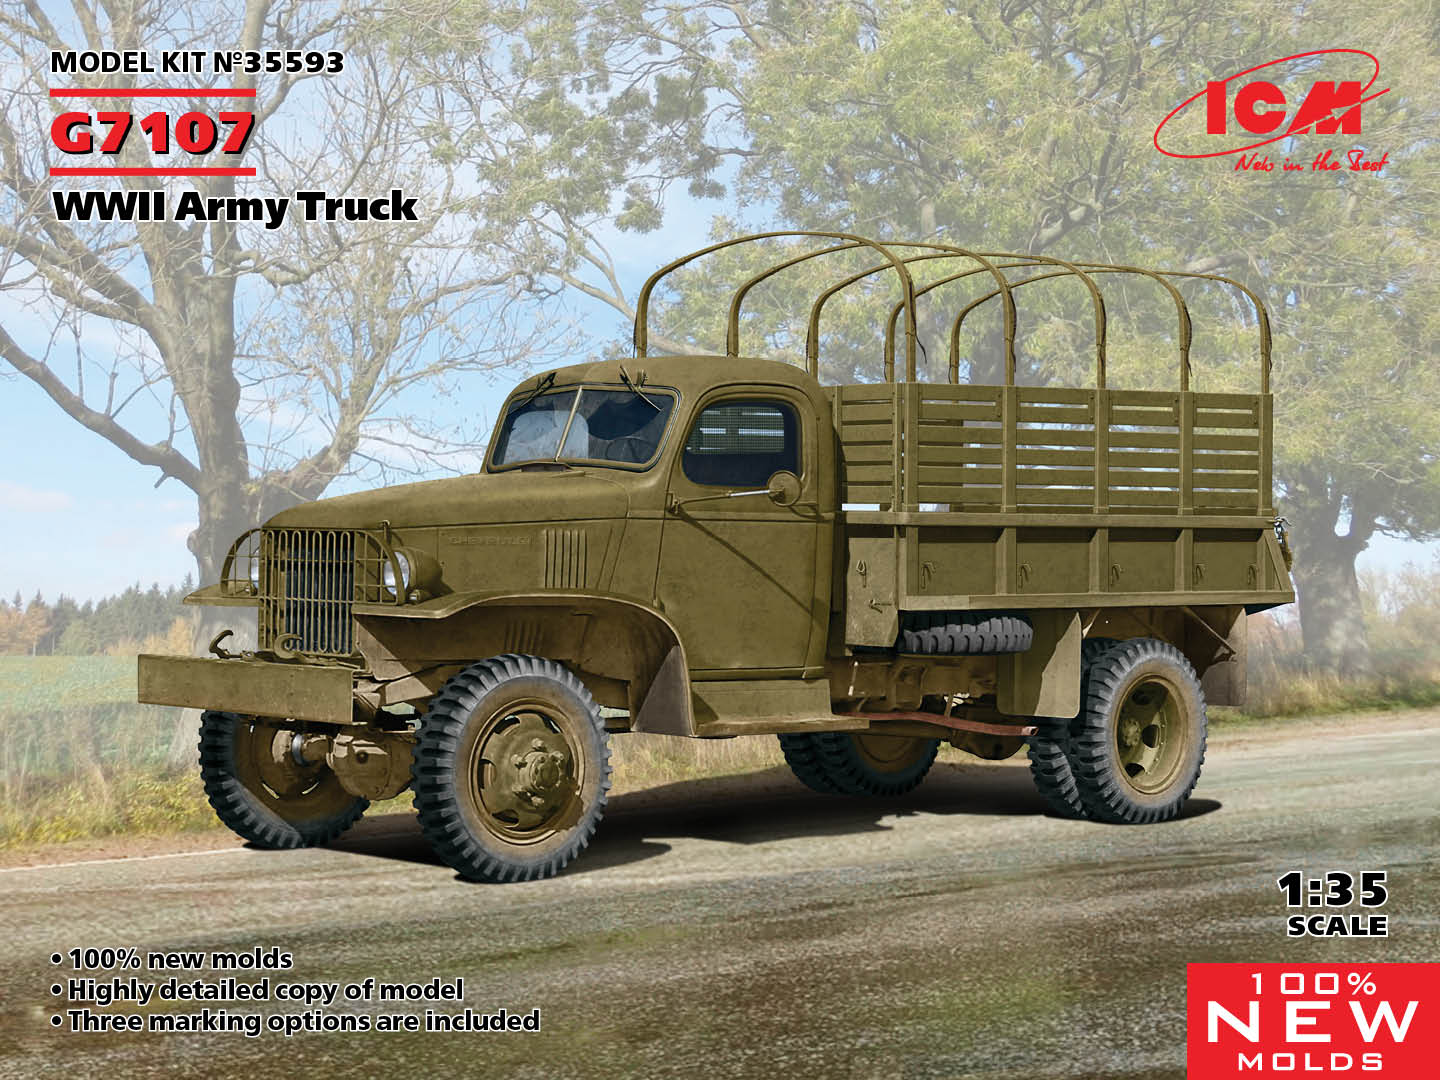 G7107 - WWII Army Track